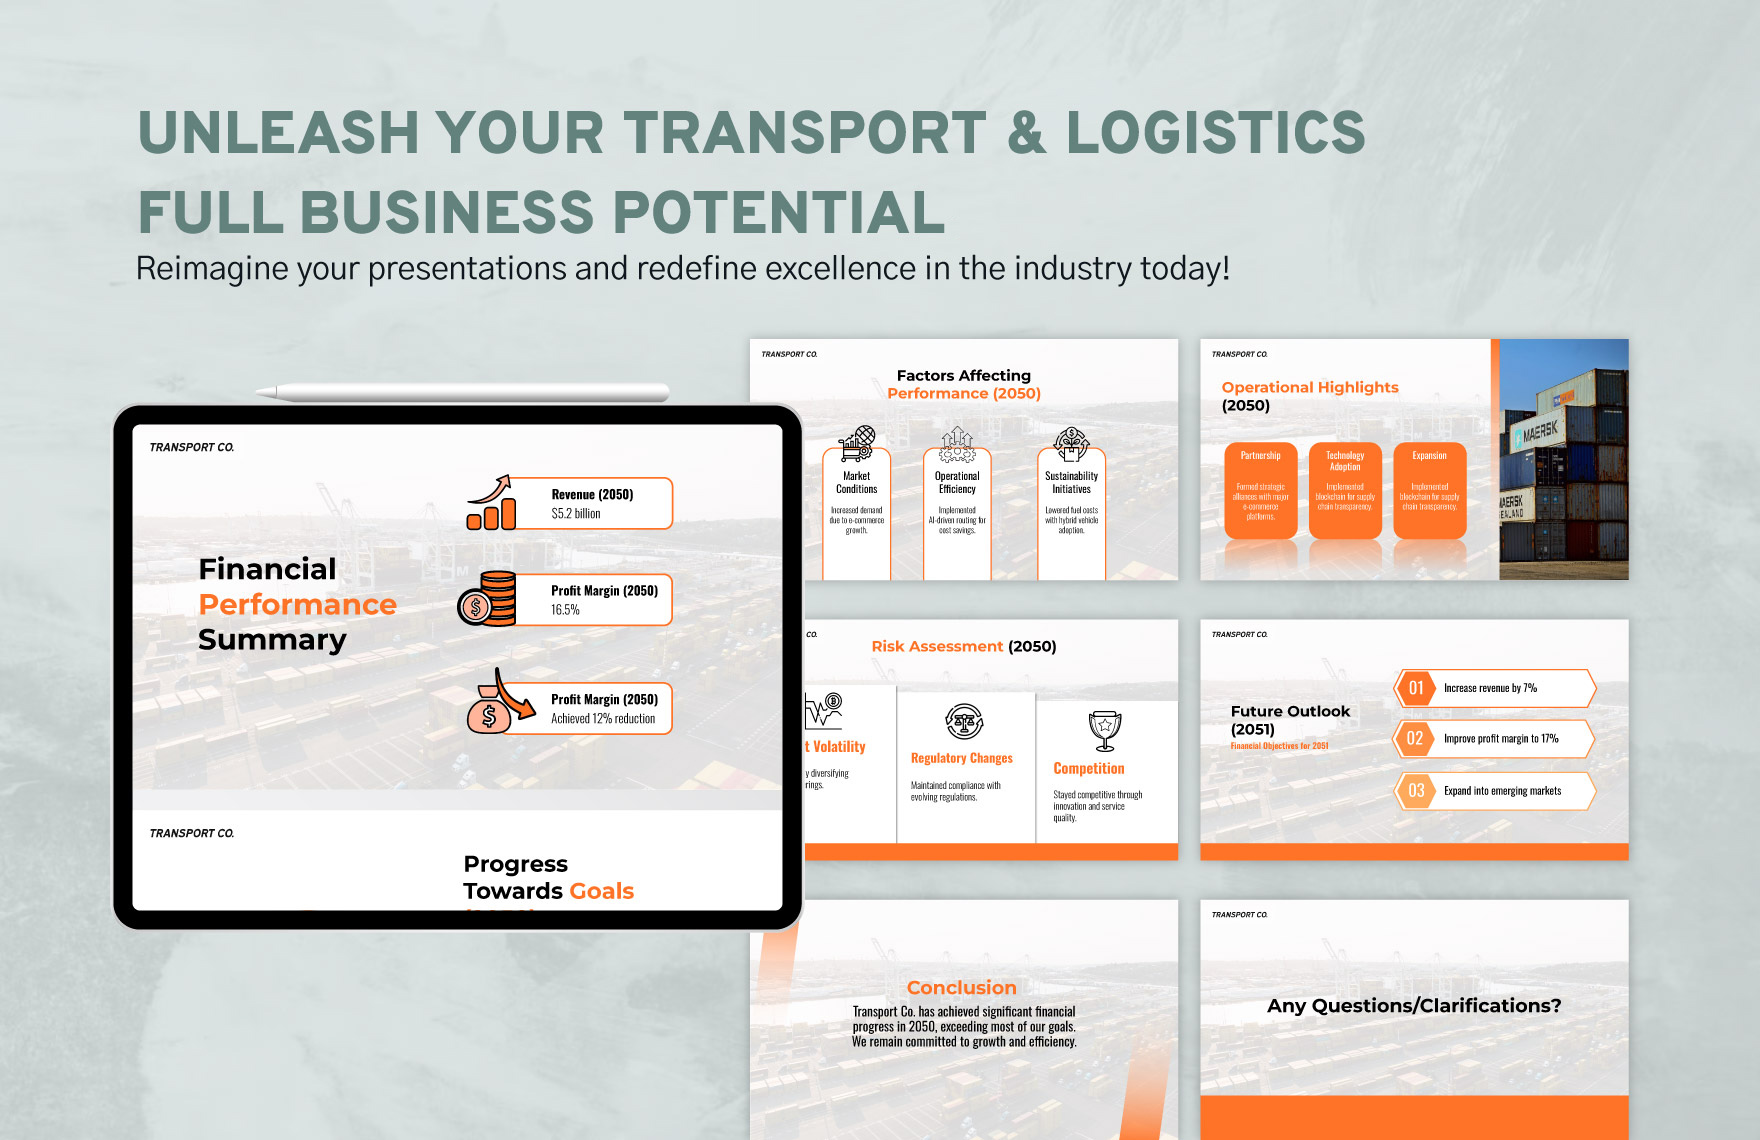 Transport and Logistics Financial Goal Progress Report Presentation Template